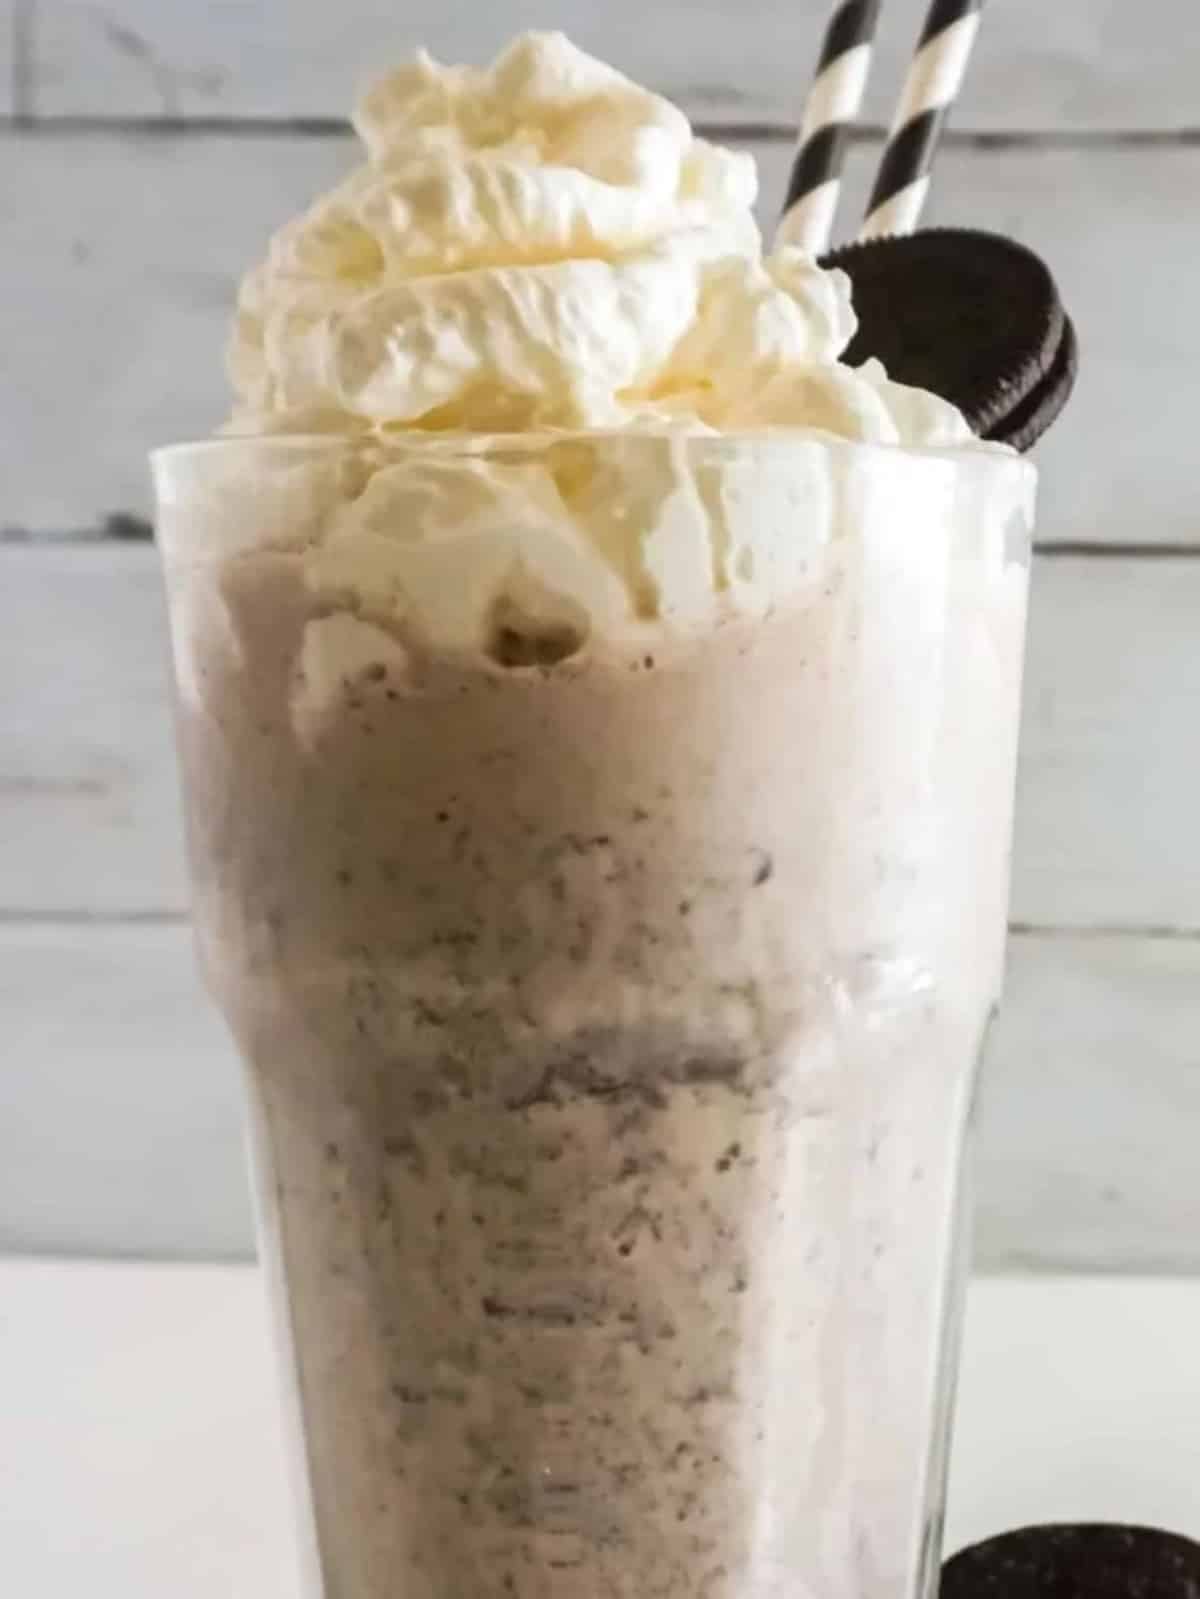 oreo milkshake recipe